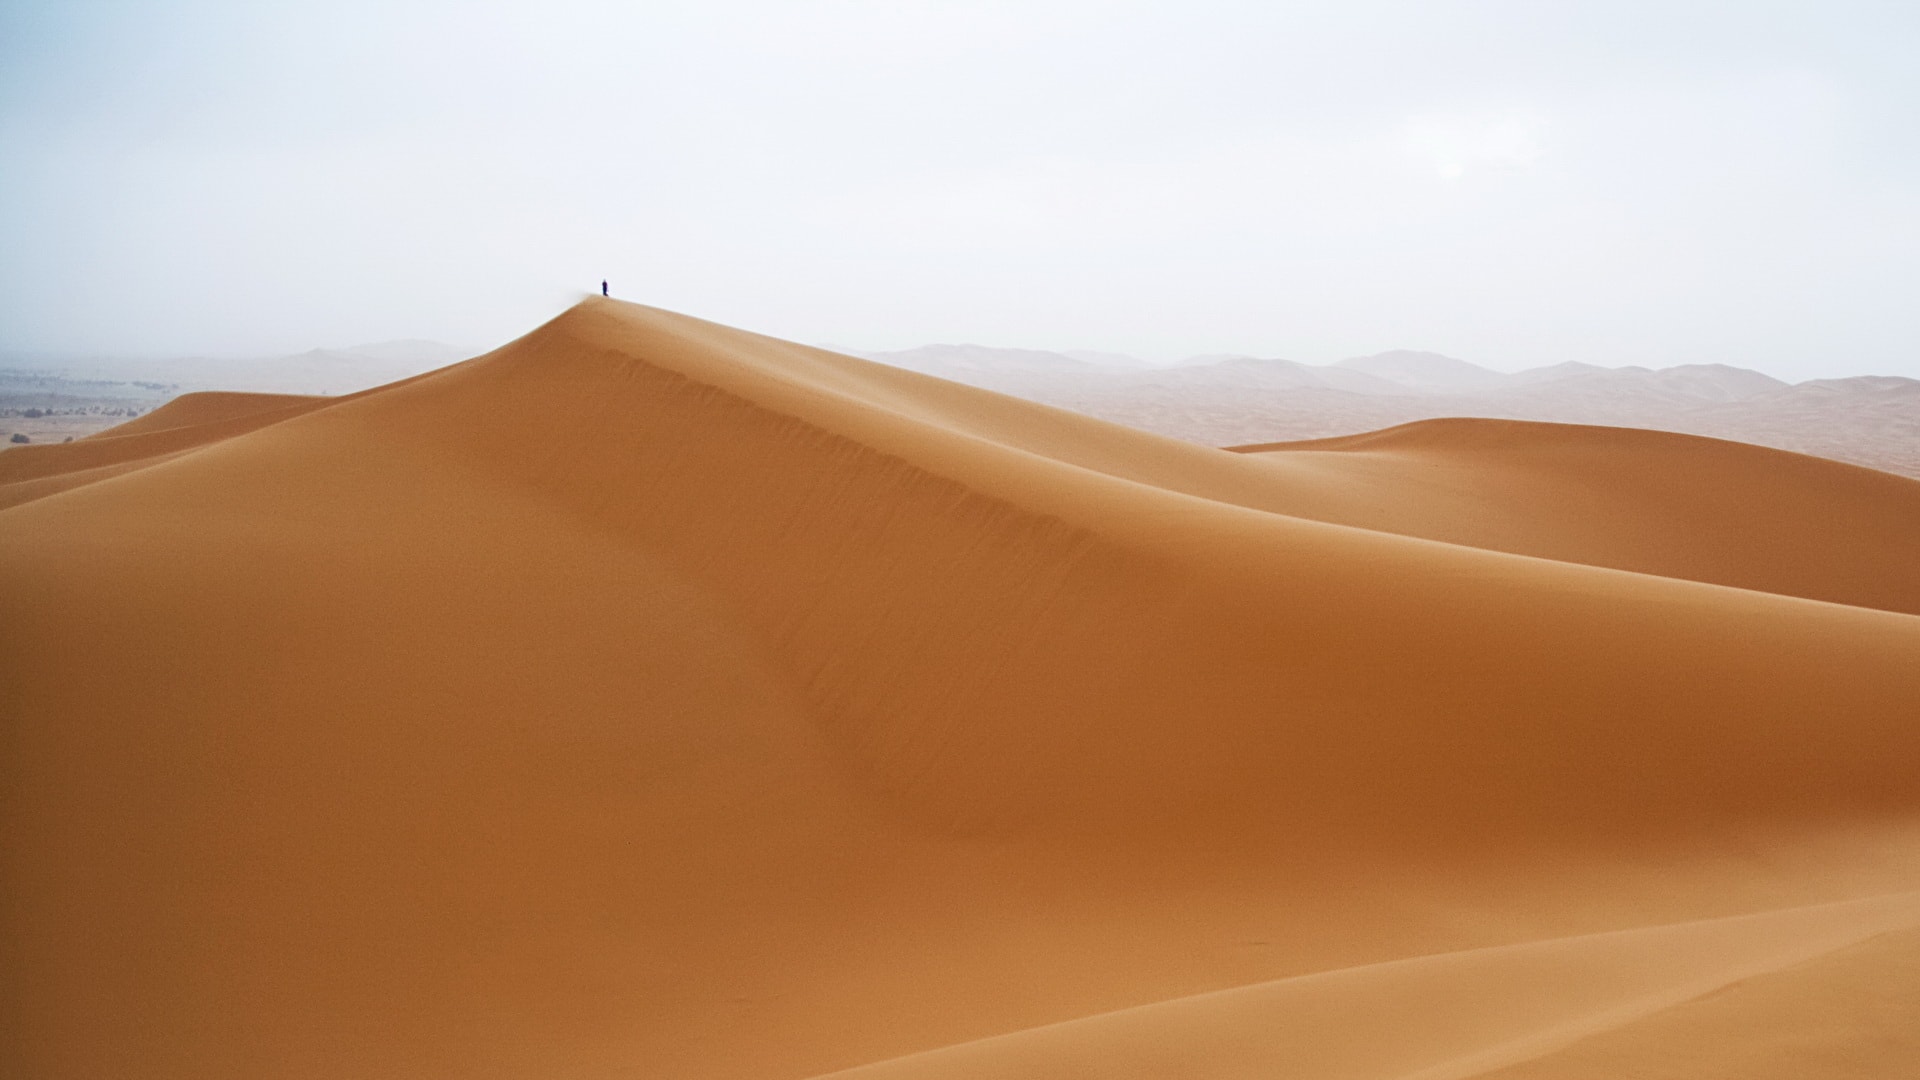 pathfinders treks - 3 days 2 nights morocco desert safari tour